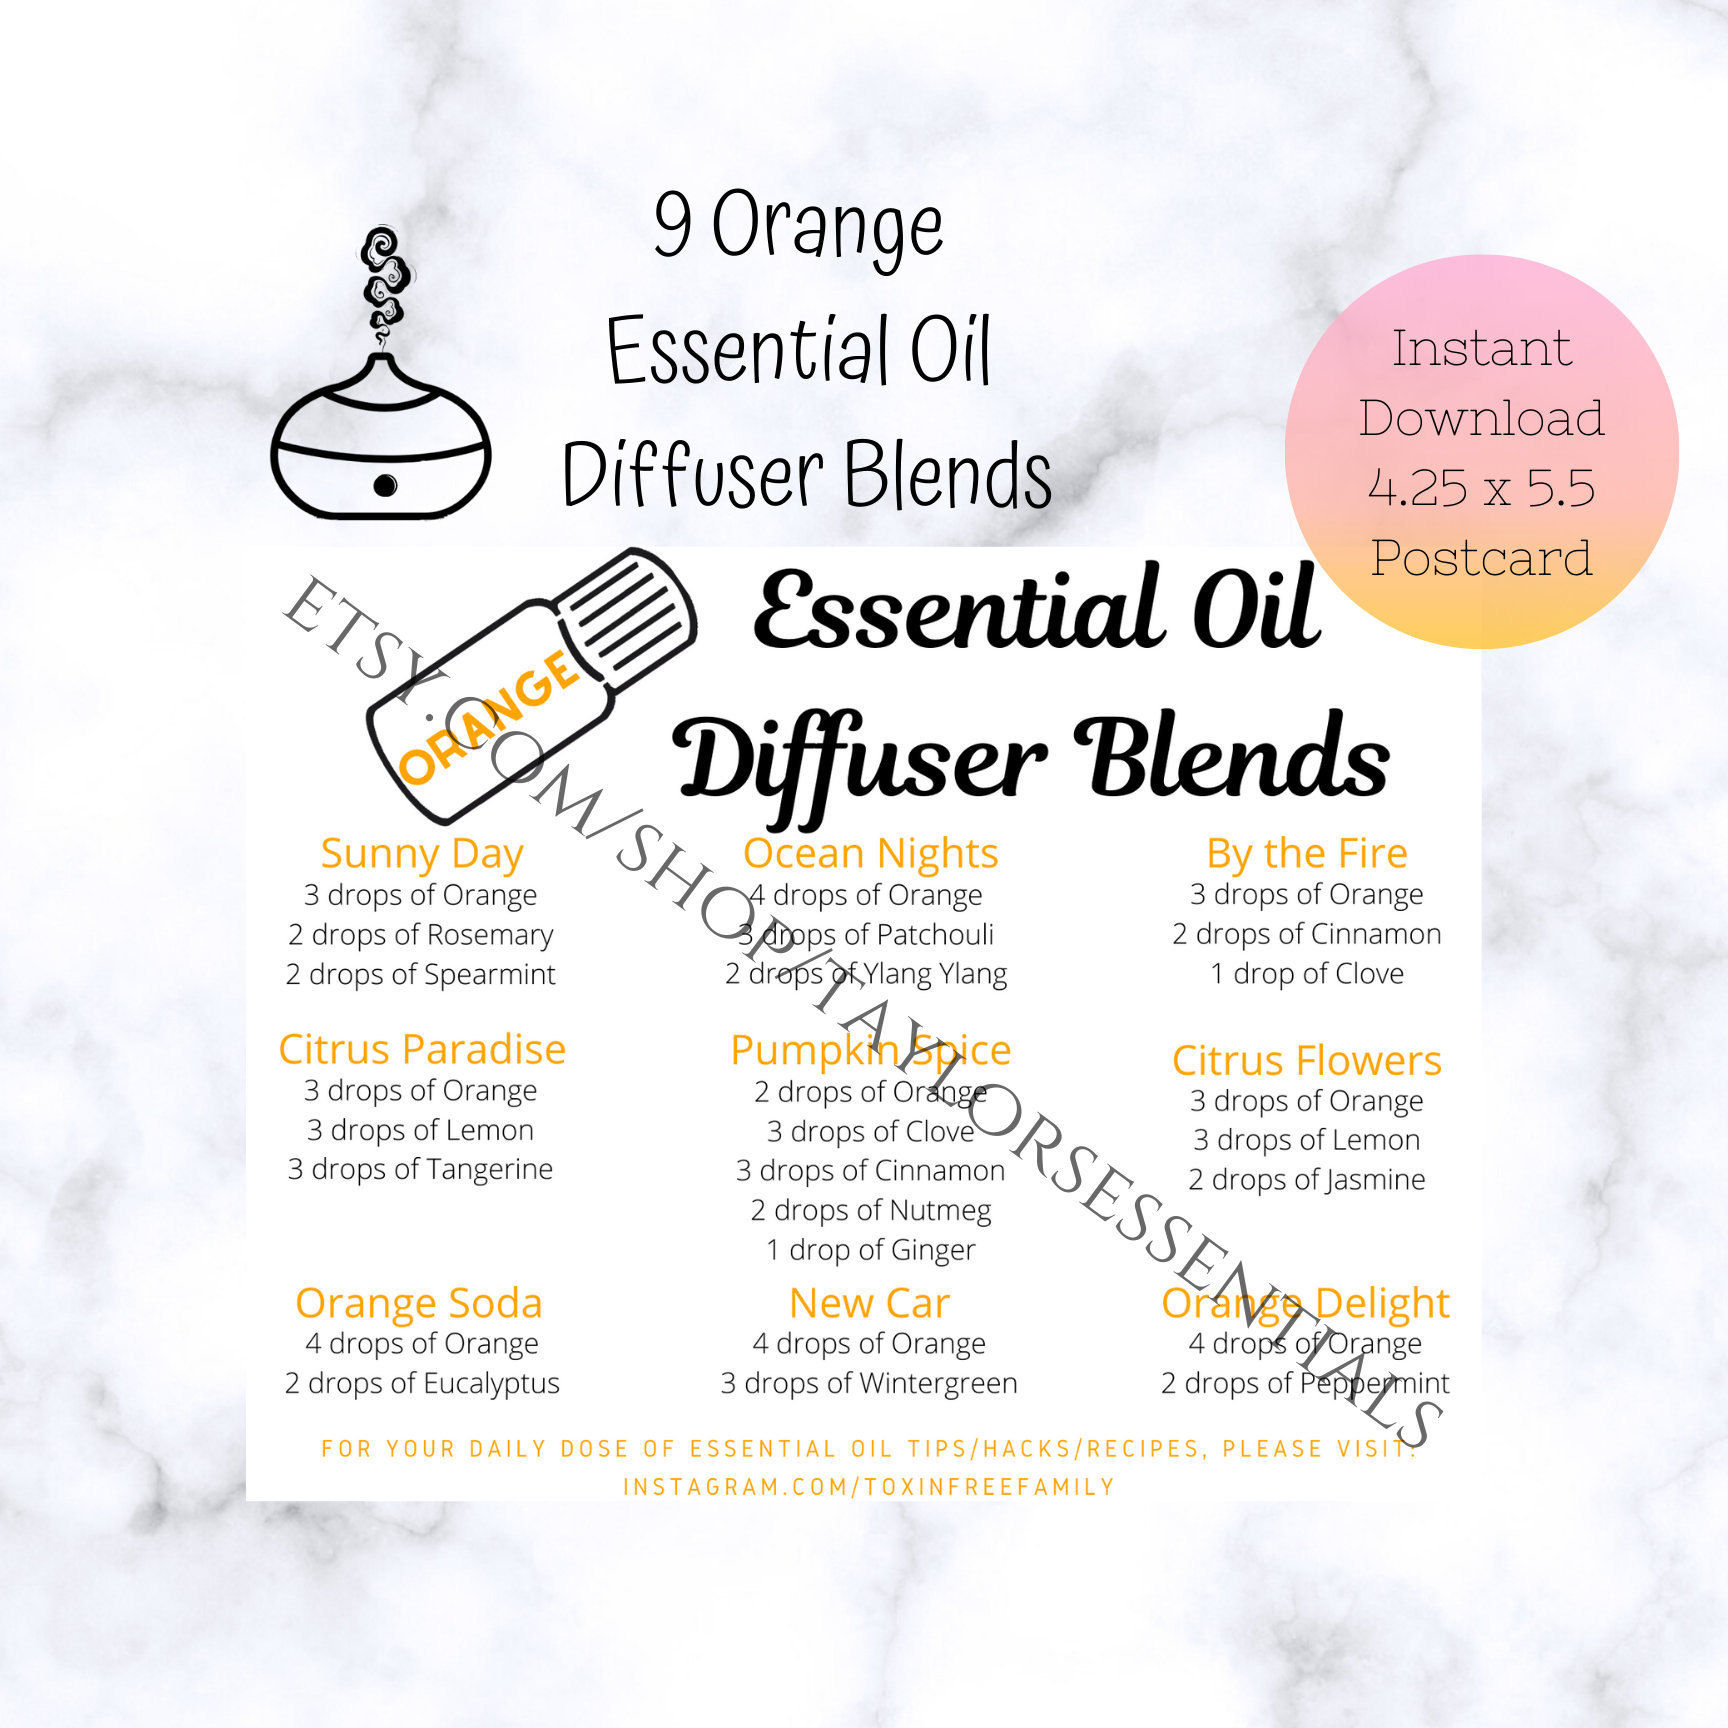 Orange Diffuser Blends Orange Essential Oil Diffuser Blend Postcards  Printable Diffuser Blend Recipes Digital Download 